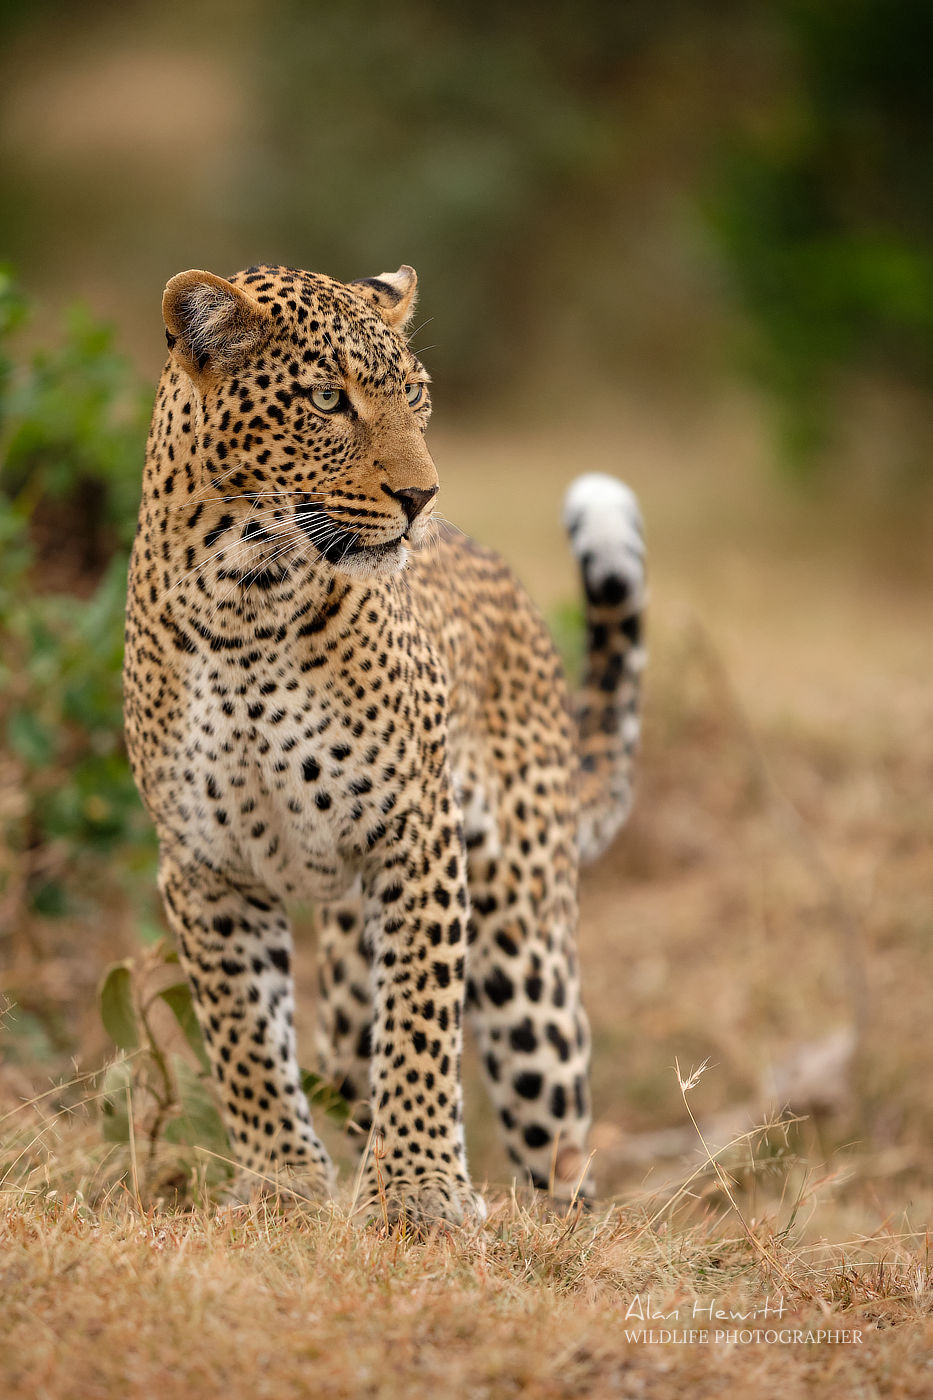 Female Leopard, Ol Choro Conservancy. Photographed with the Fujifilm X-H1 & Fujinon 200mm f/2.